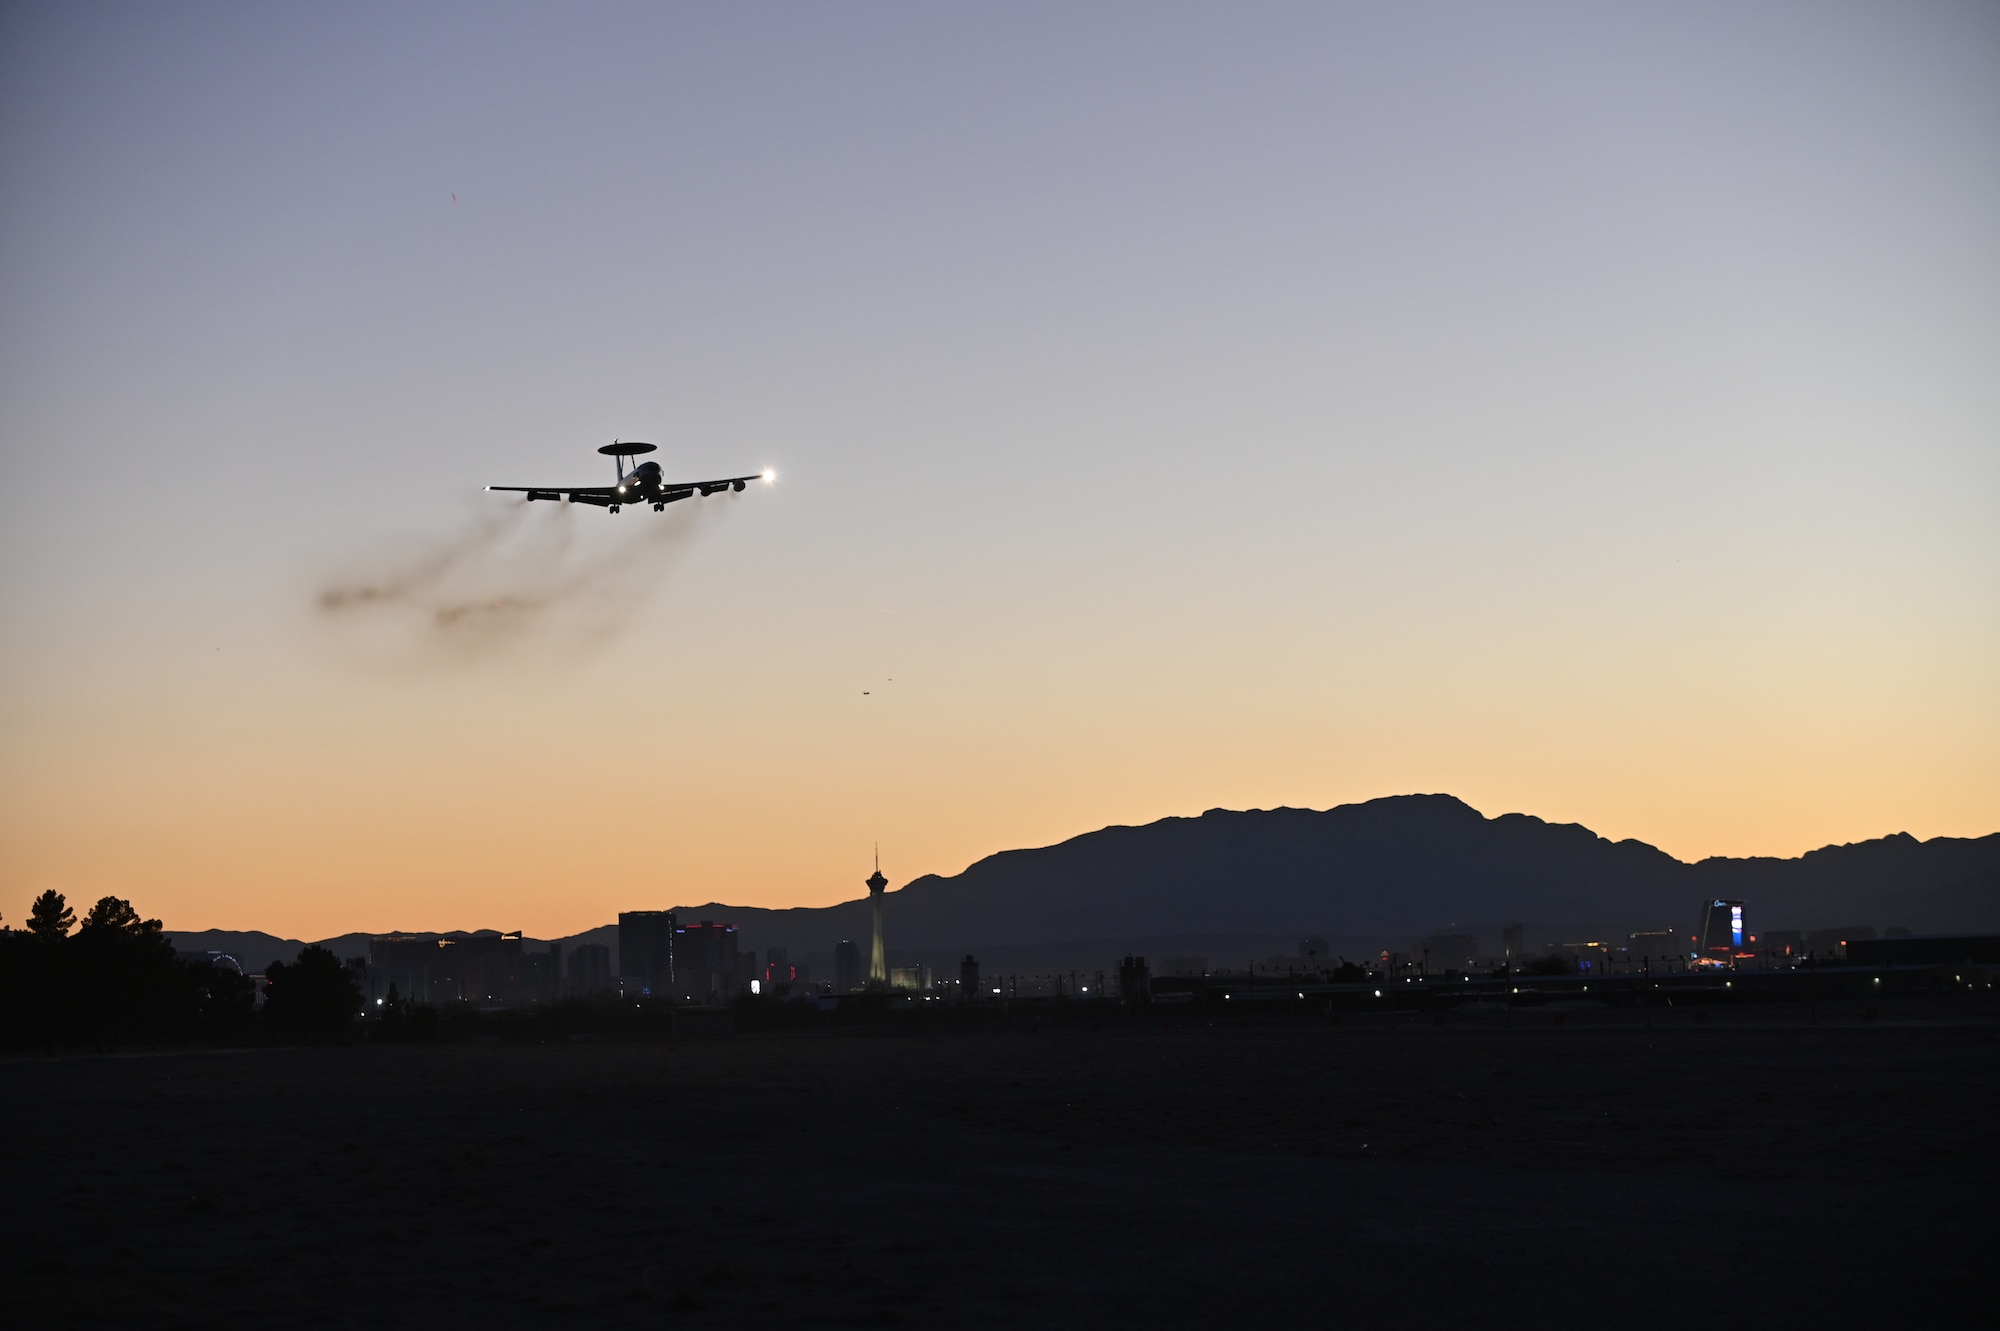 E-3A aircraft lands at sunset against the Las Vegas skyline.